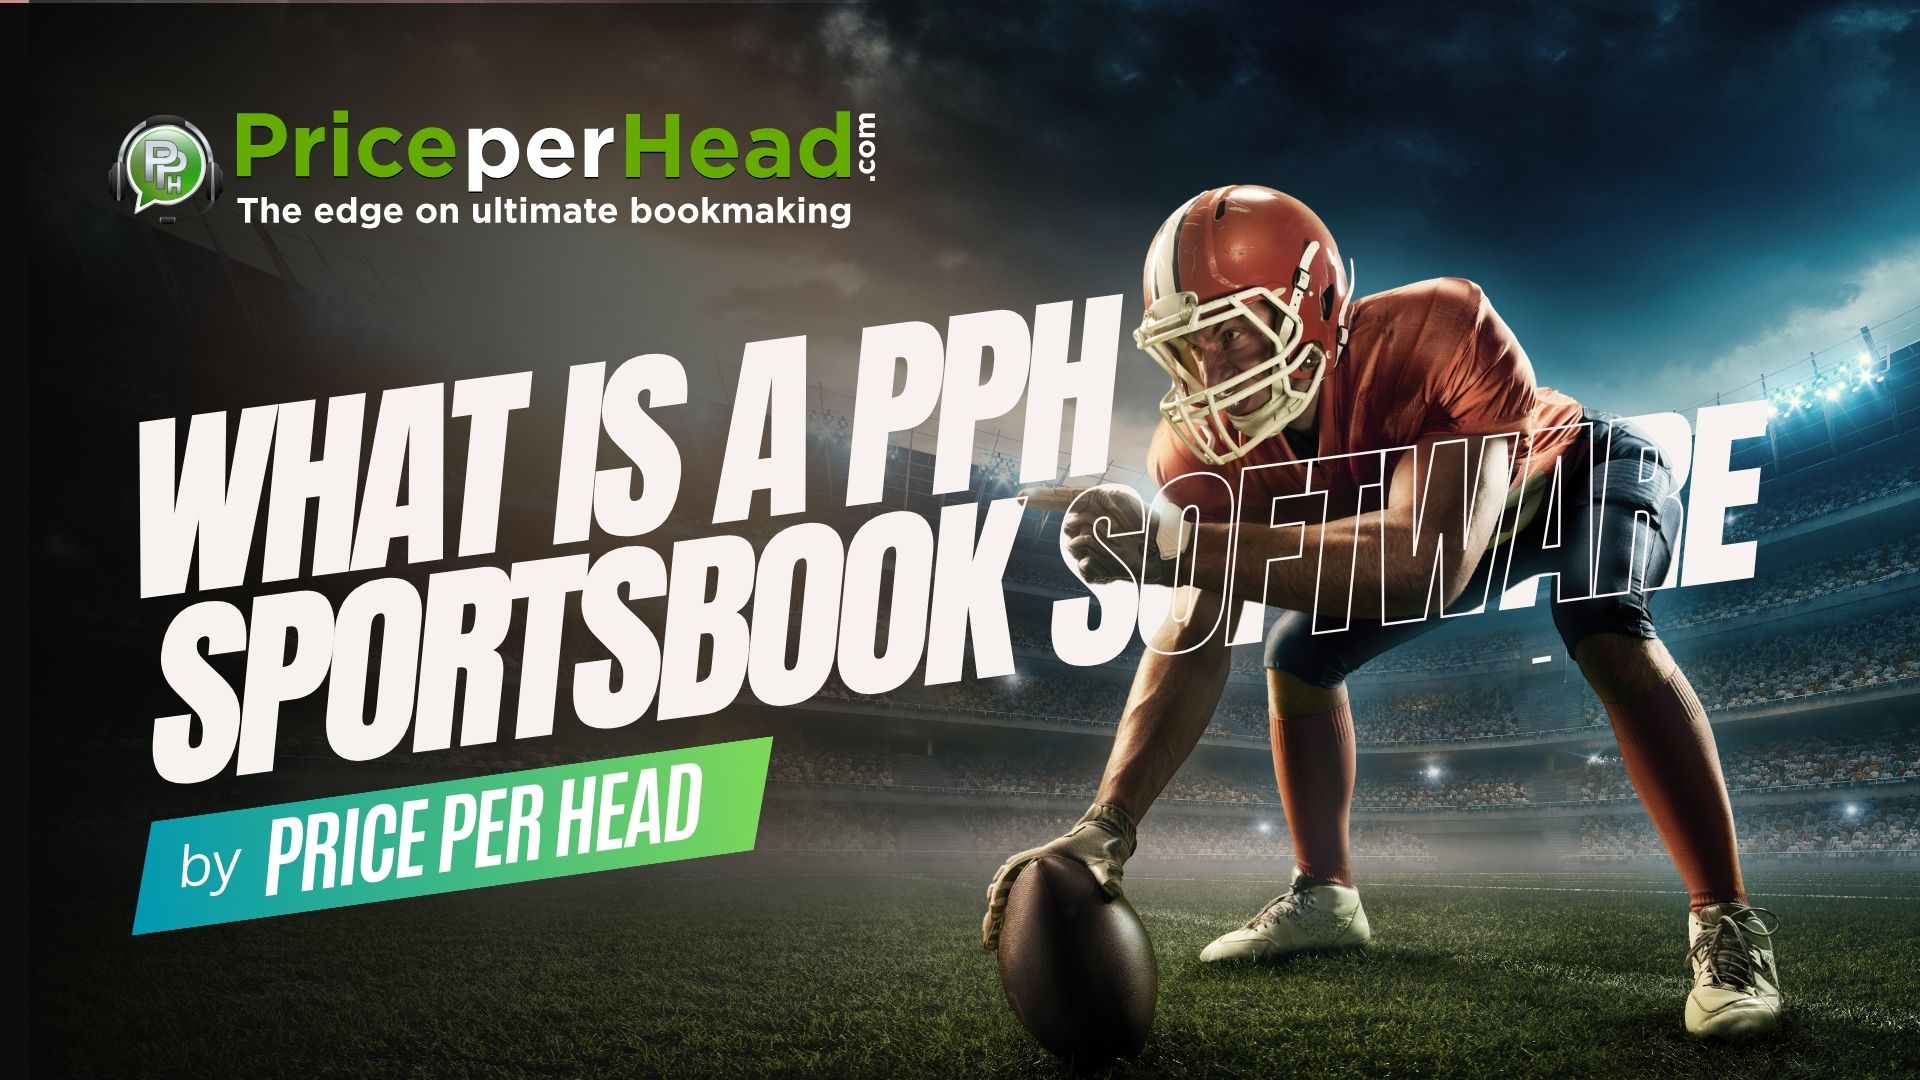 pay per head software, price per head, sportsbook